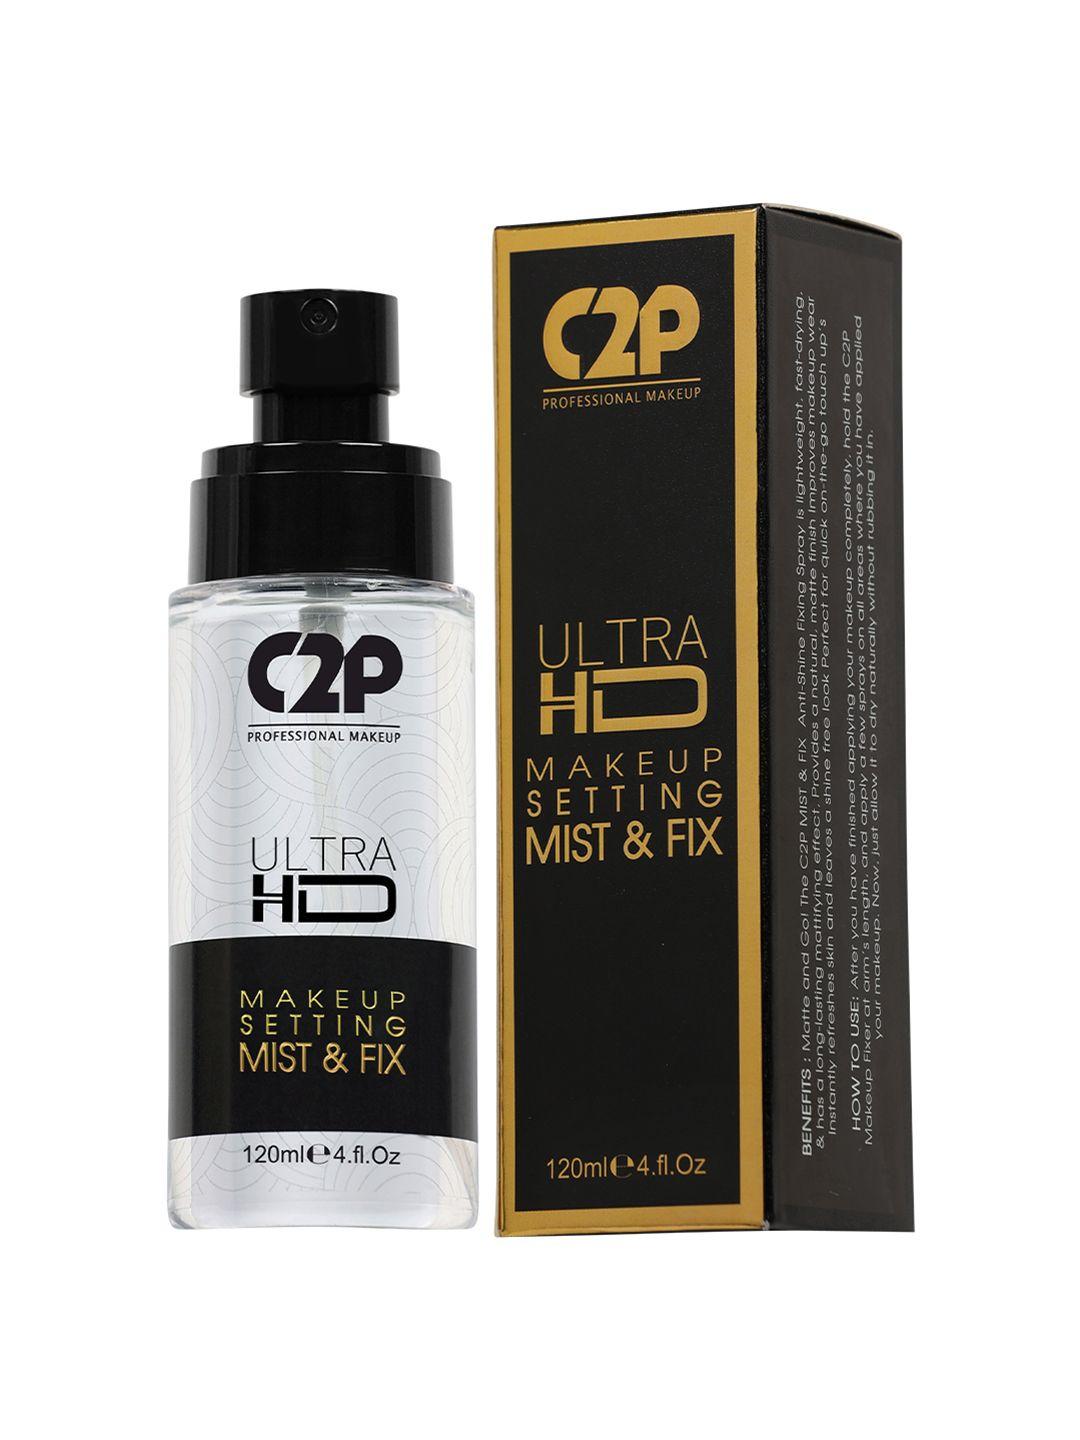 c2p professional makeup ultra hd makeup setting mist & fix spray - transparent